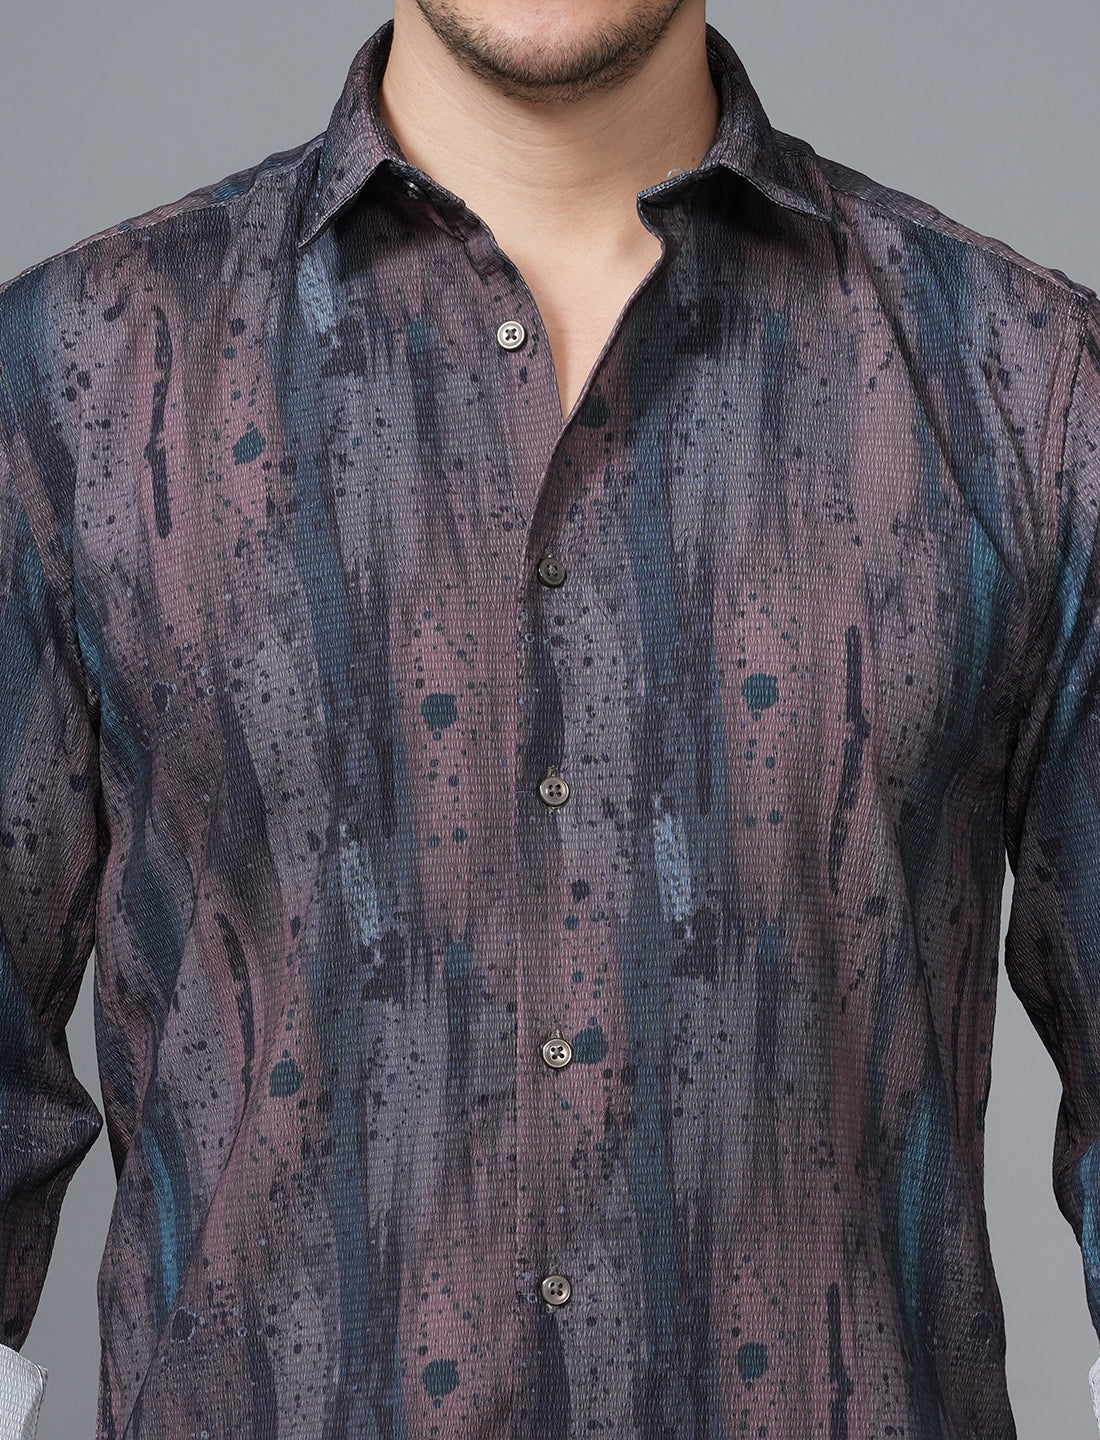 Buy Multi Full Sleeve Printed Shirt Online